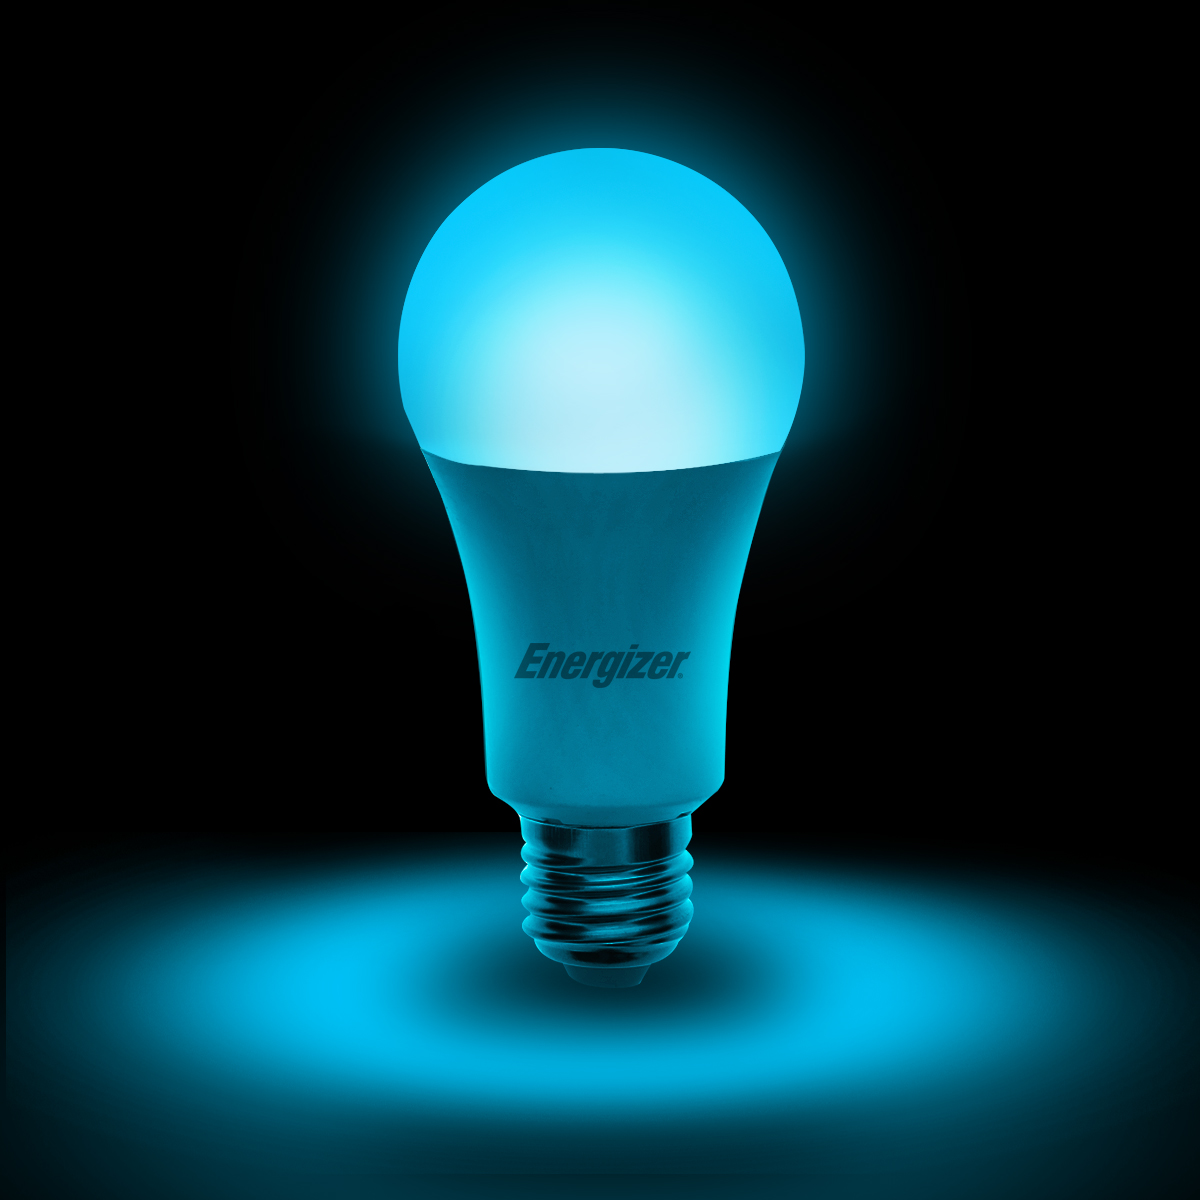 Smart Wifi White & Multi-Color LED A19/E26 Light Bulb